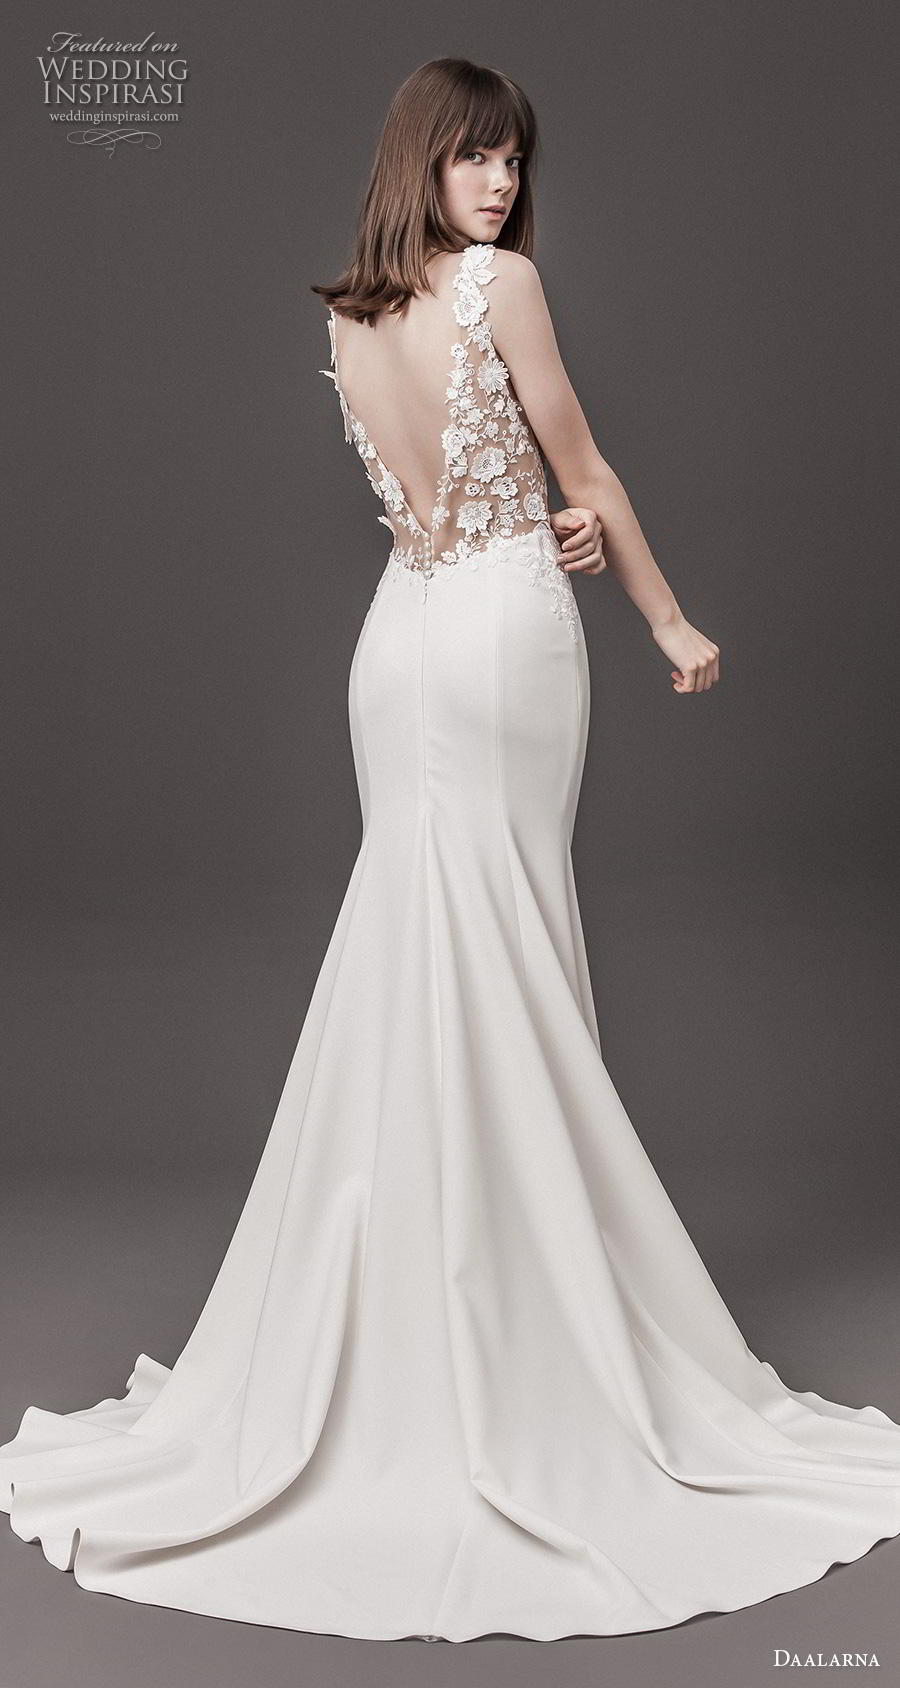 daalarna 2020 bridal sleeveless v neck heavily embellished bodice clean skirt elegant fit and flare wedding dress v back medium train (10) bv